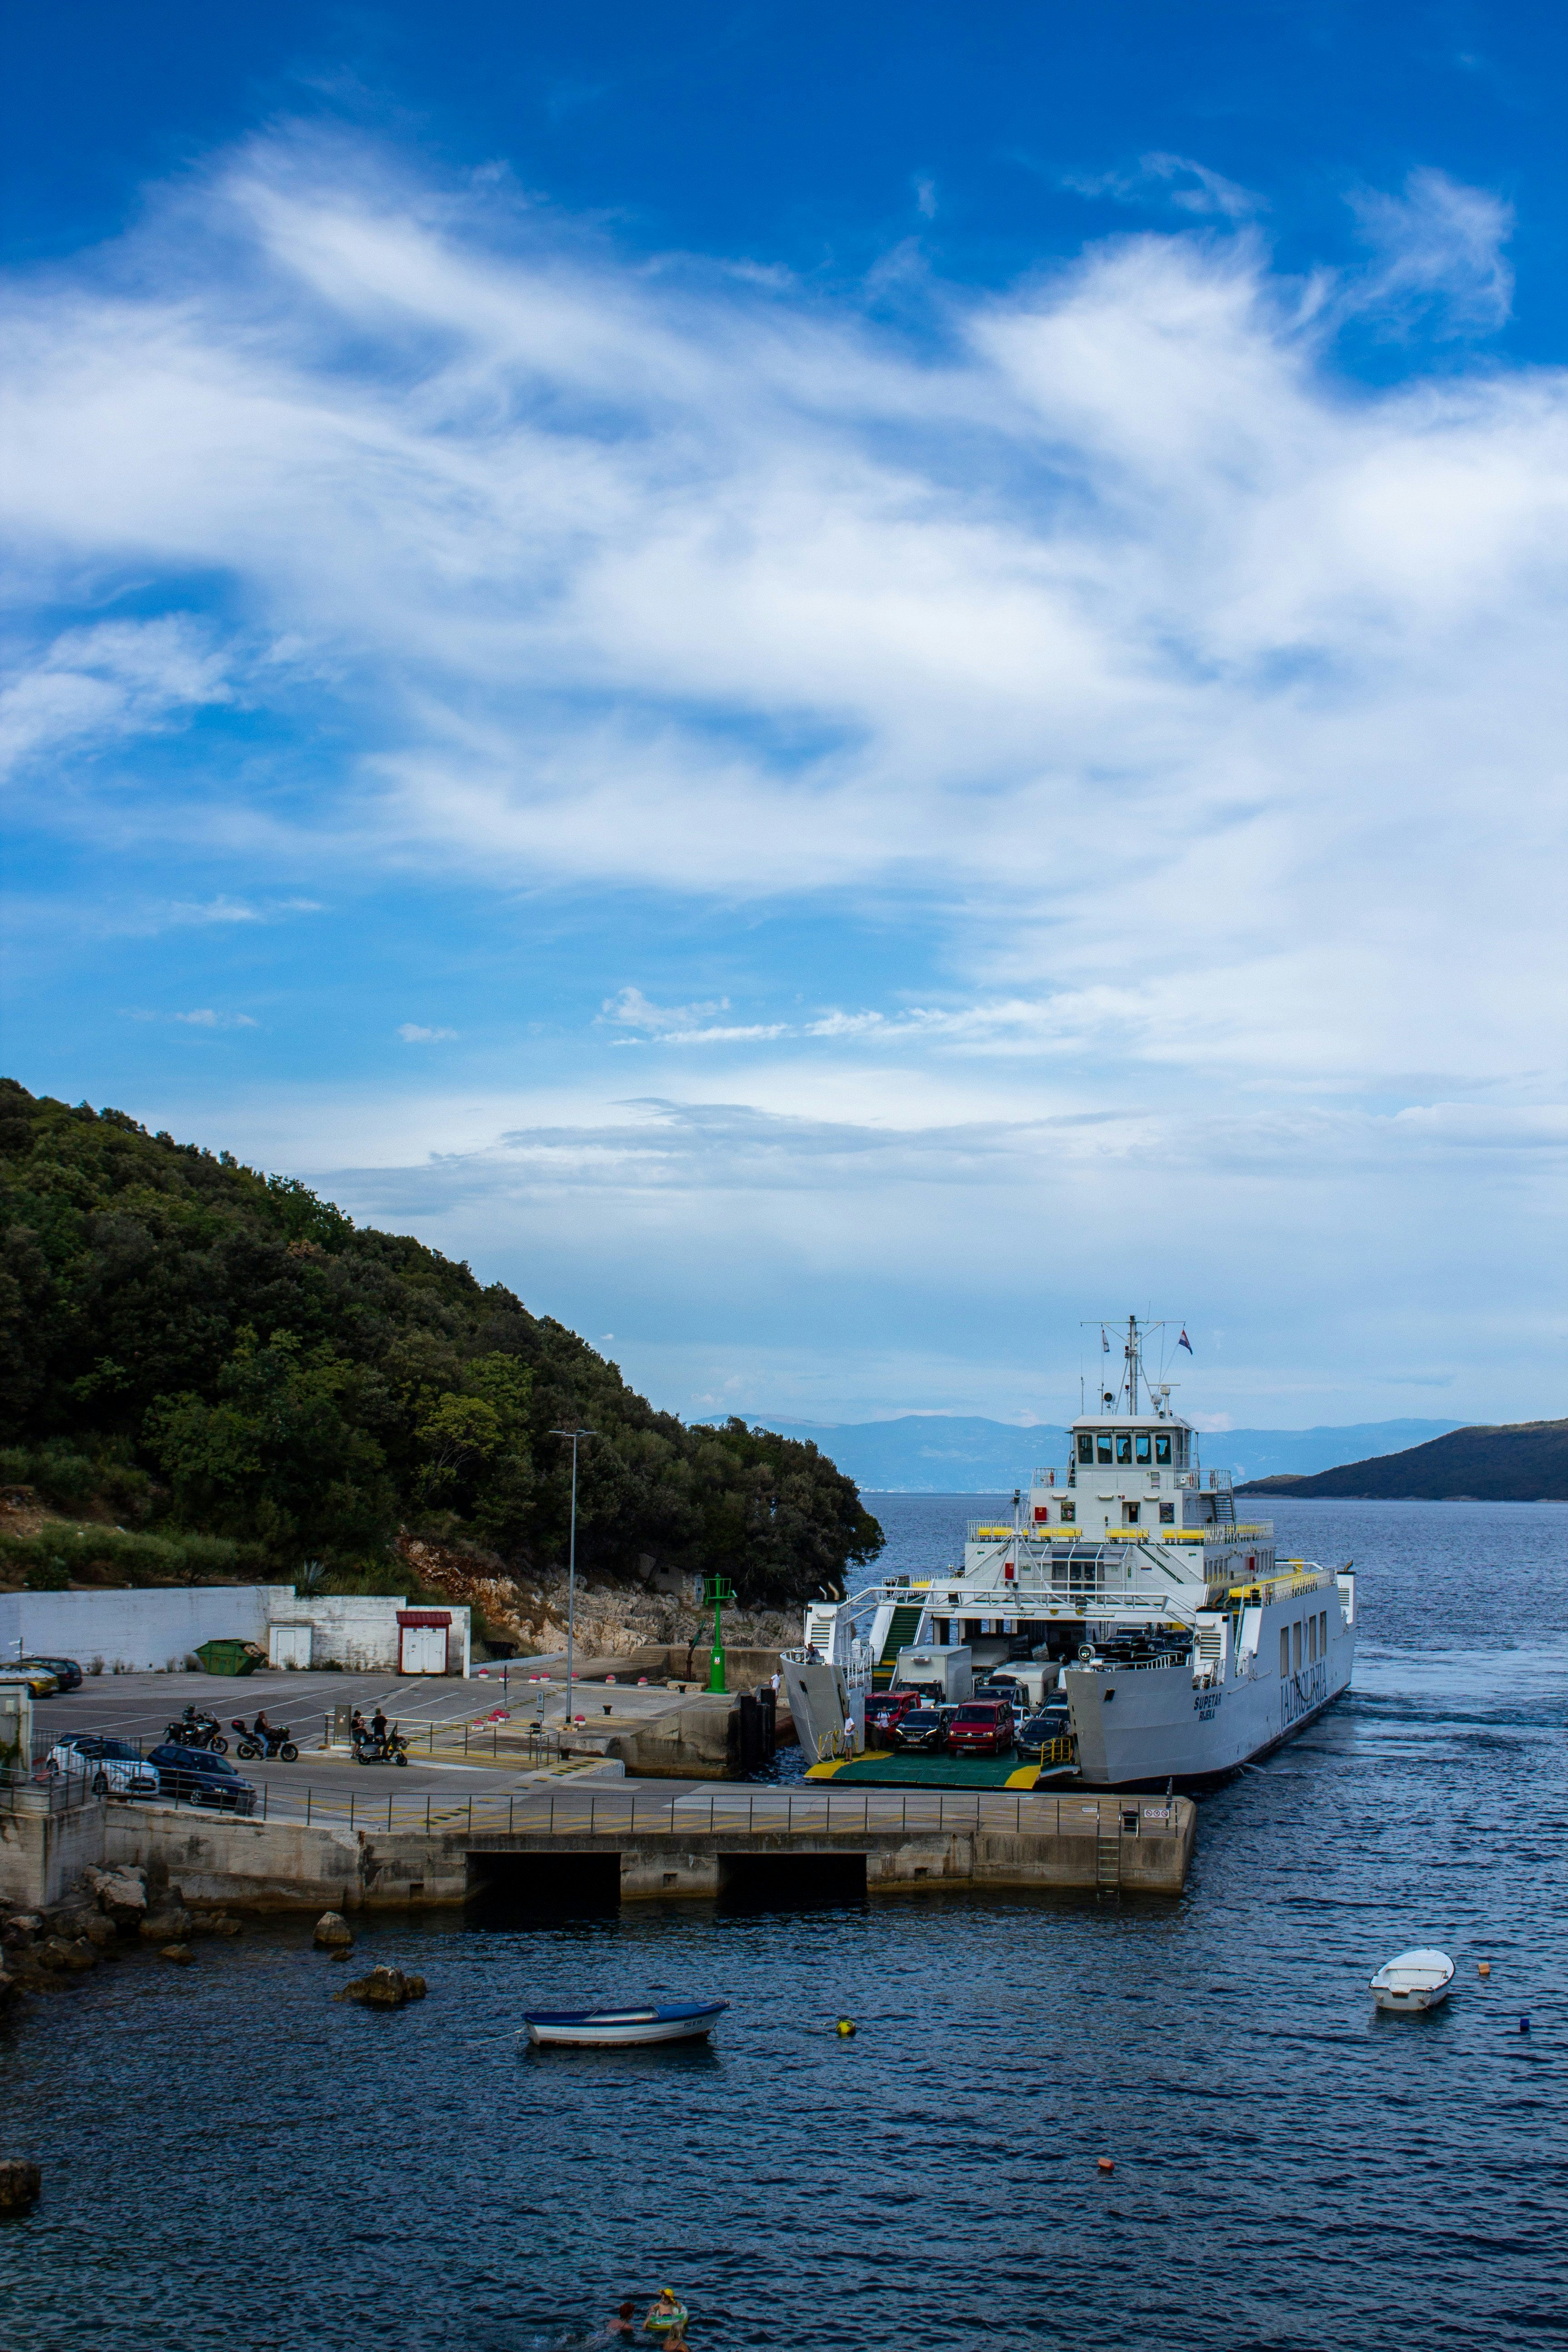 Jadrolinija ferry docking in a bay in Croatia